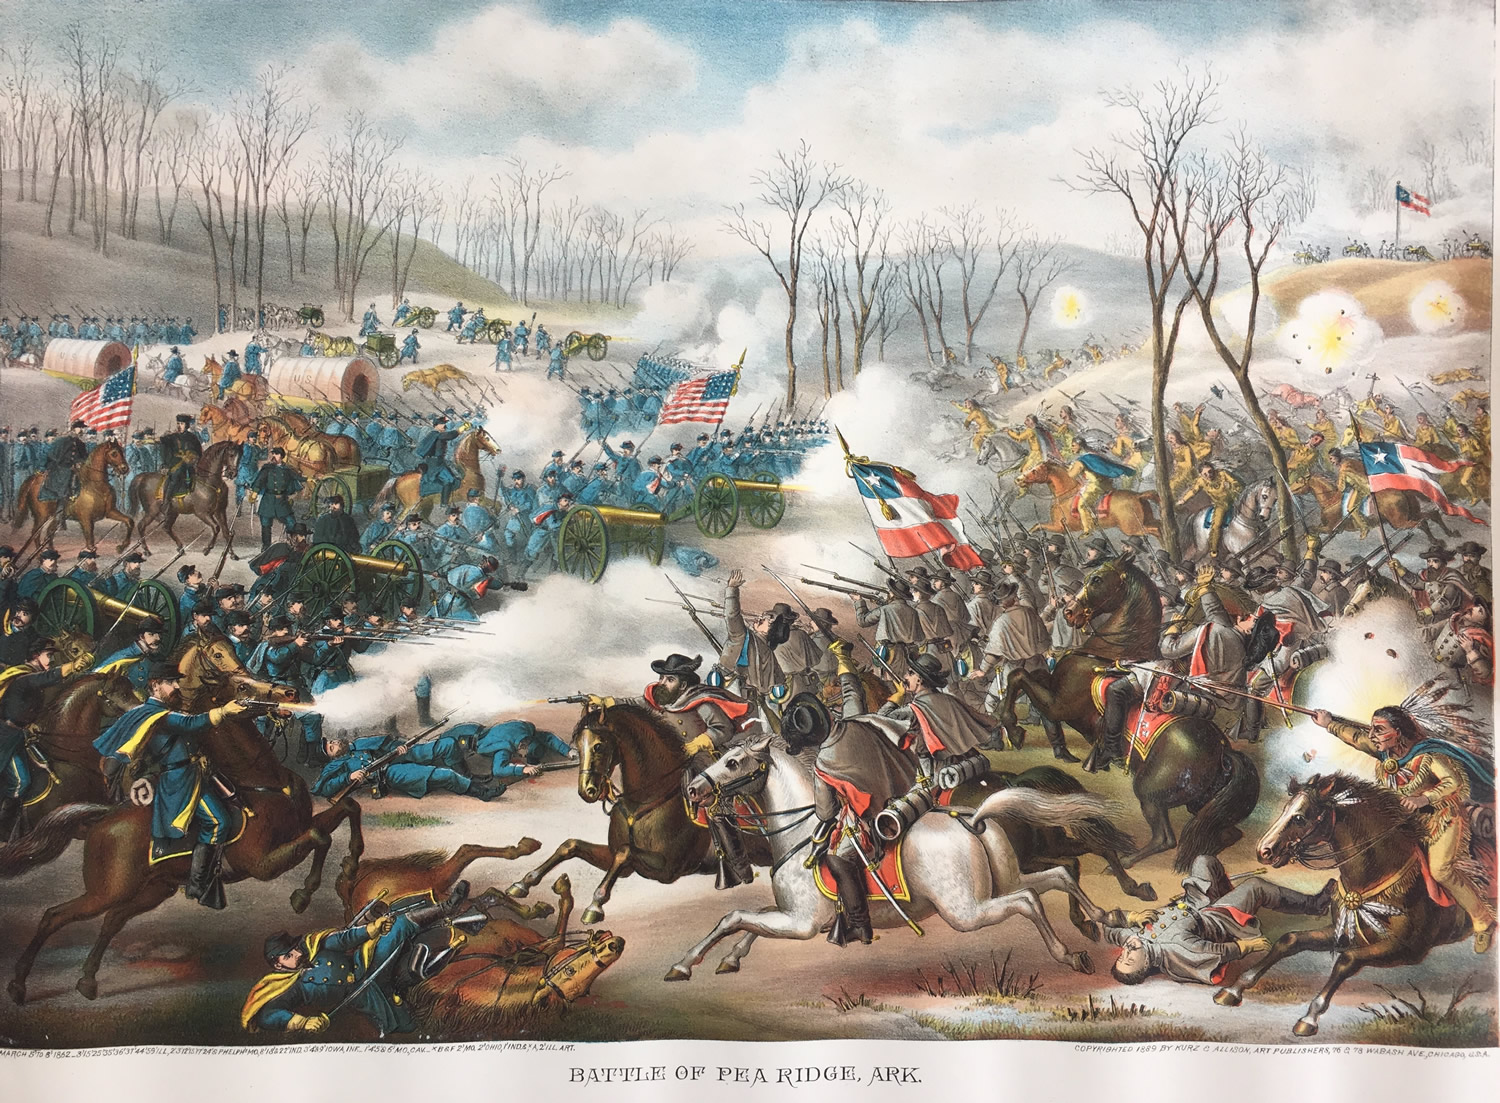 Battle of Pea Ridge, Arkansas by Kurz and Allison, late 1800s, Collection of Eric Stoltz